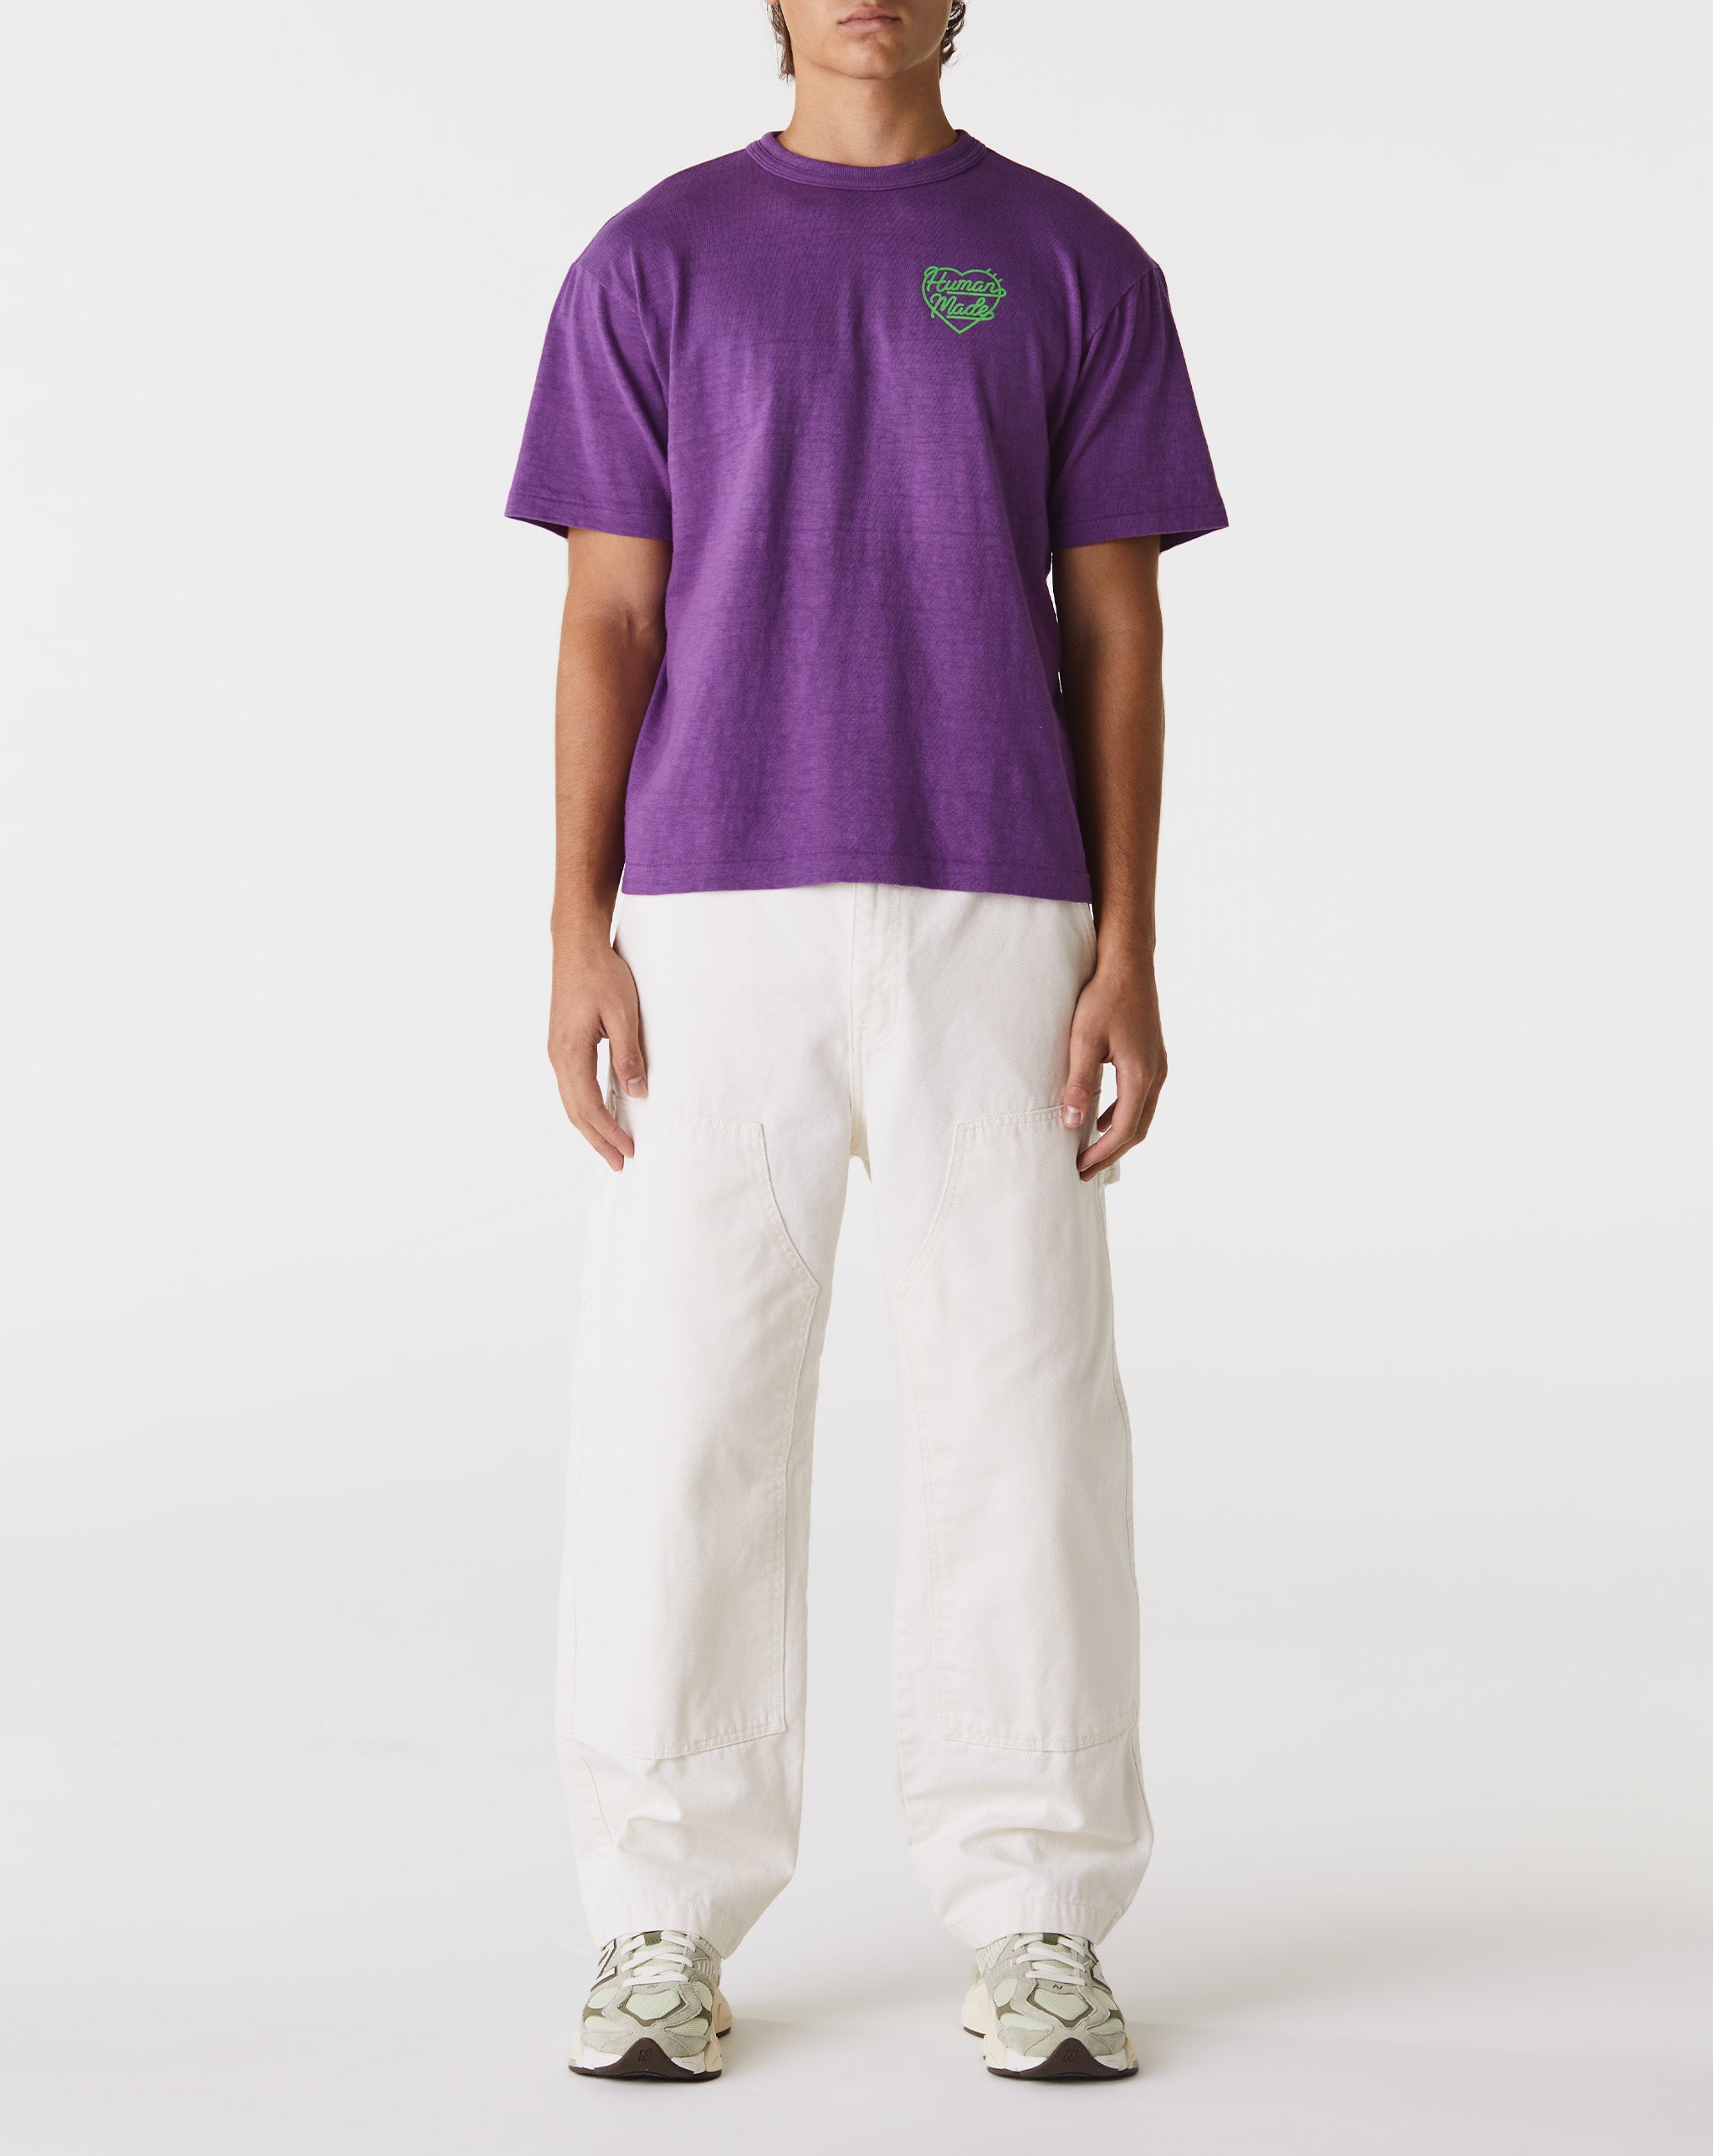 Human Made Color T-Shirt  - Cheap Cerbe Jordan outlet